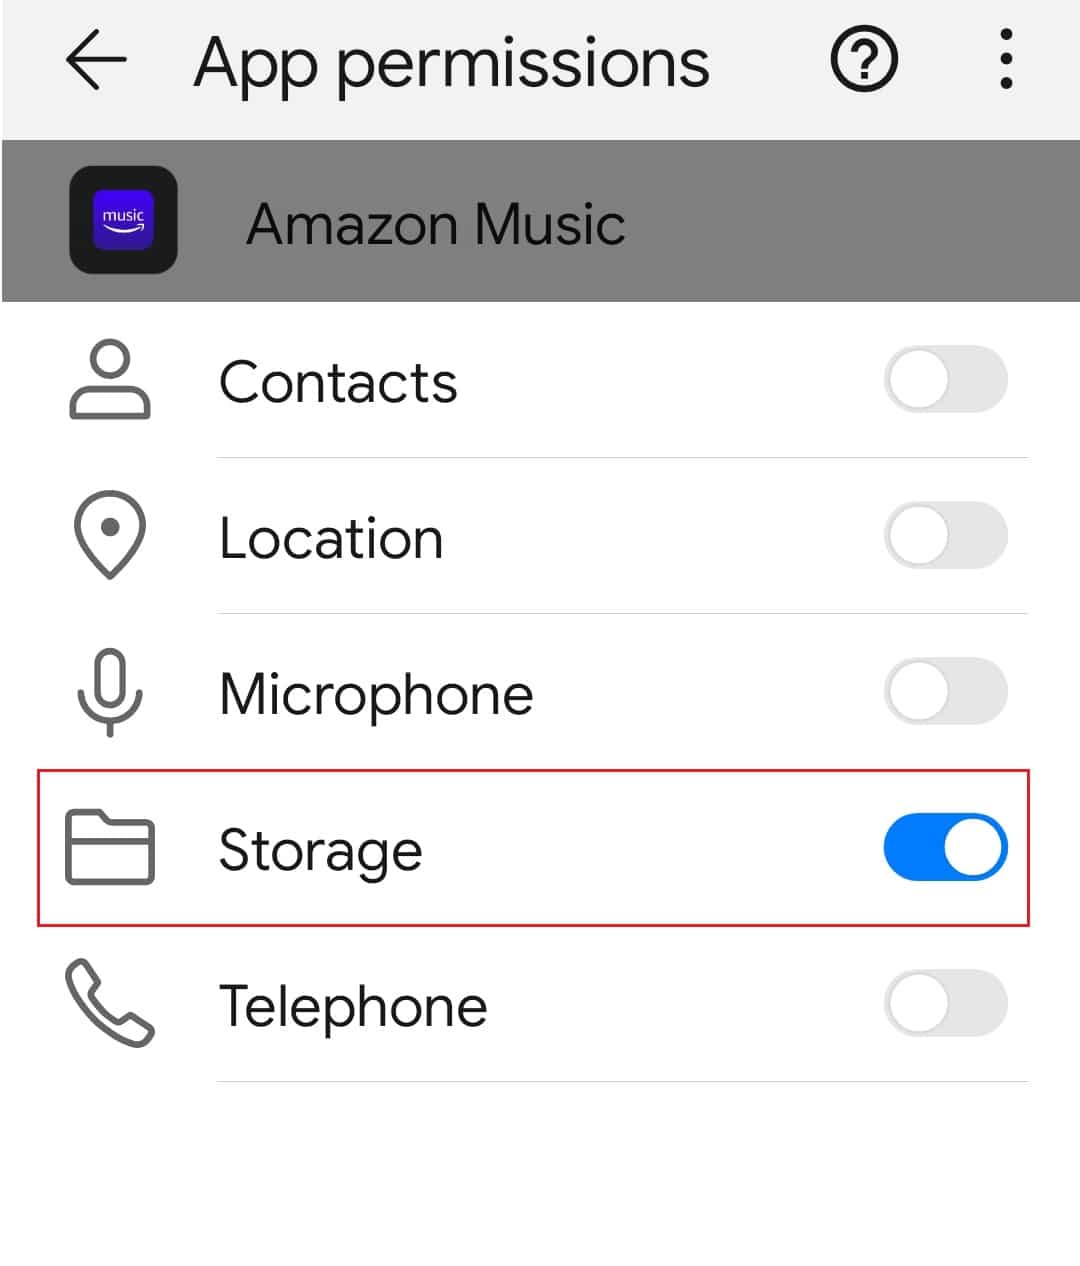 toggle On storage permission on Amazon Music App